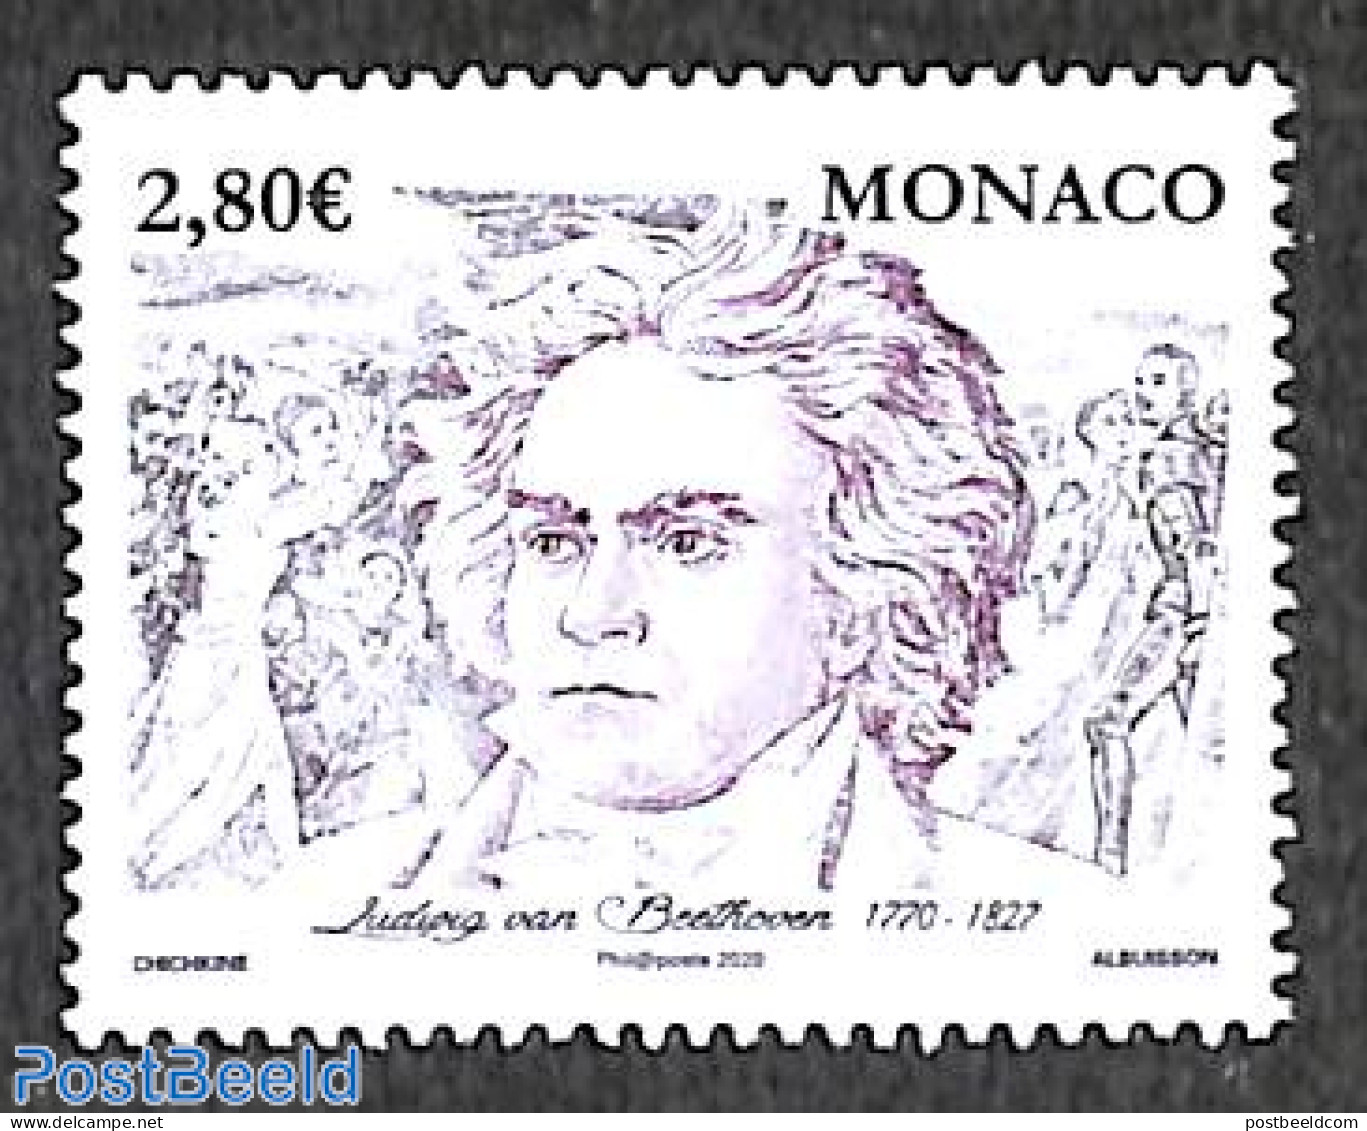 Monaco 2020 Ludwig Von Beethoven 1v, Mint NH, Performance Art - Music - Art - Composers - Ungebraucht